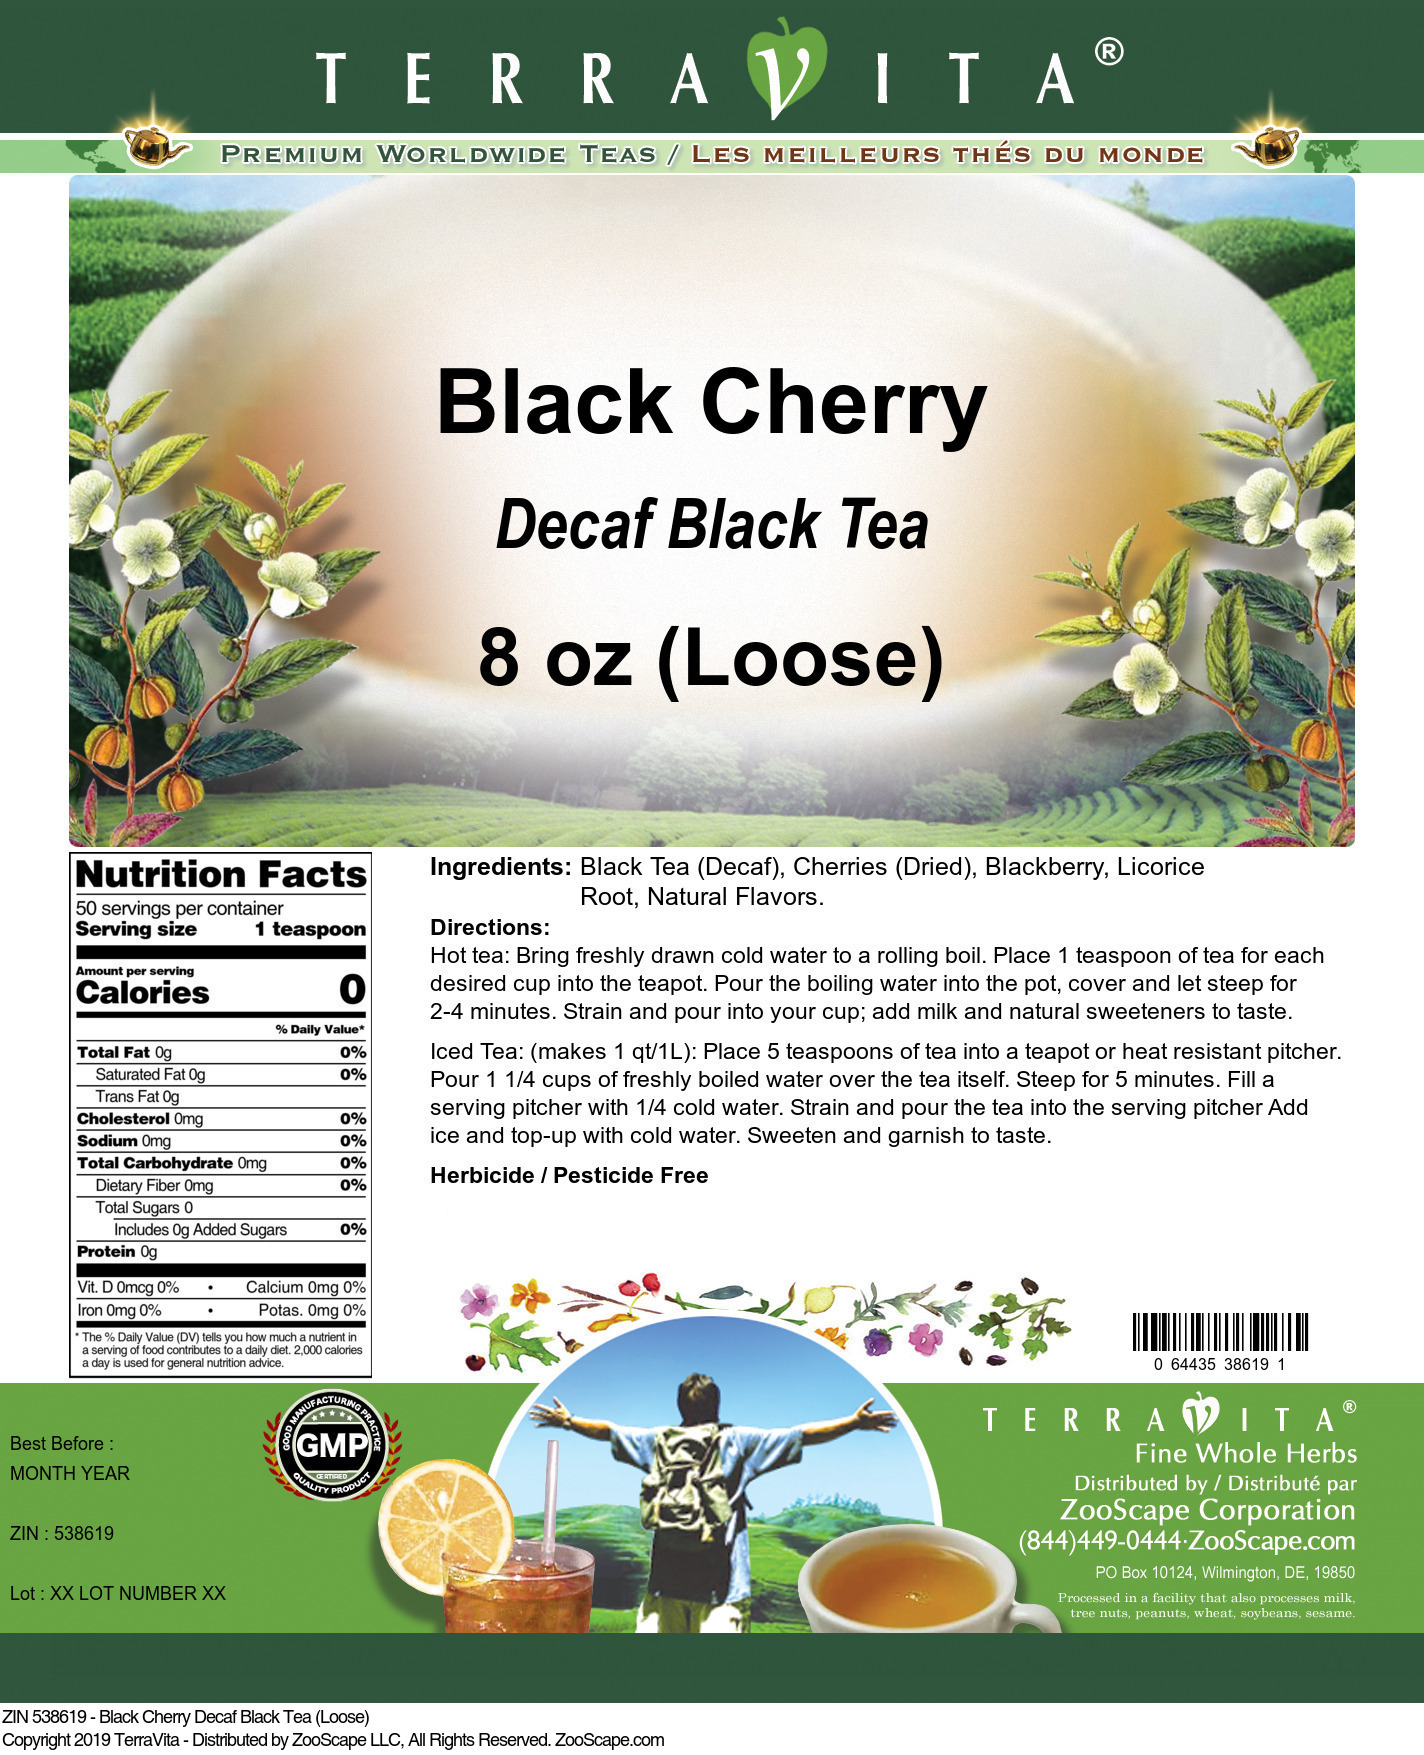 Black Cherry Decaf Black Tea (Loose) - Label